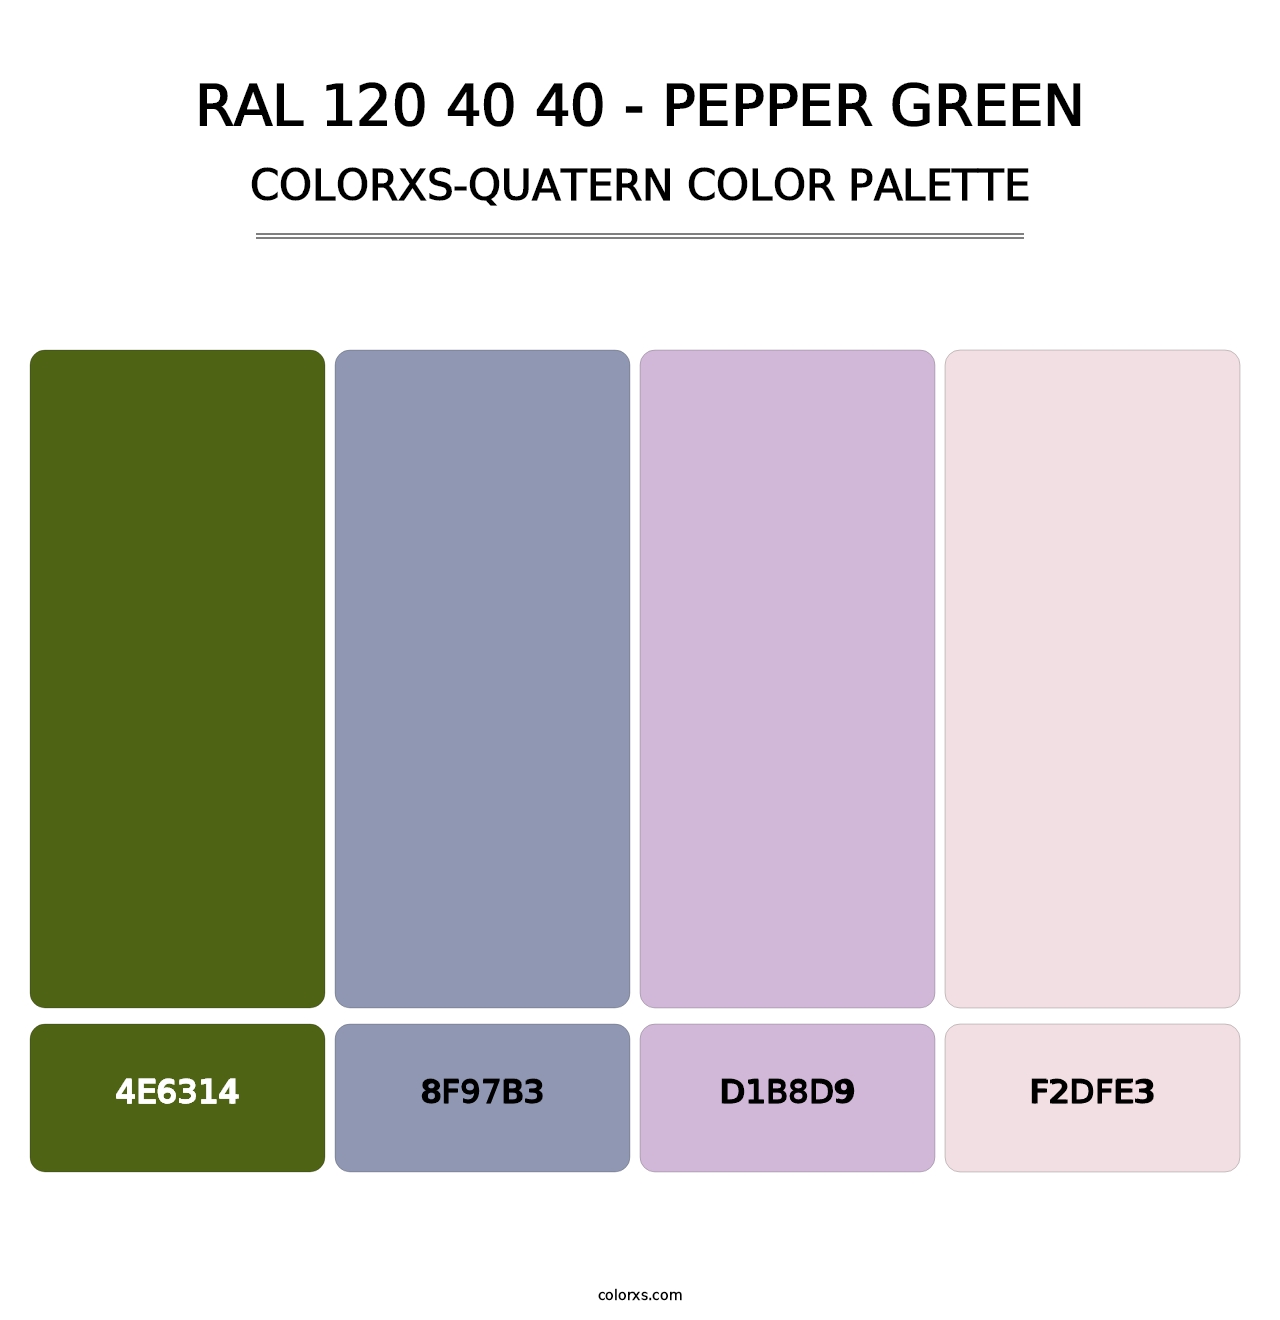 RAL 120 40 40 - Pepper Green - Colorxs Quatern Palette